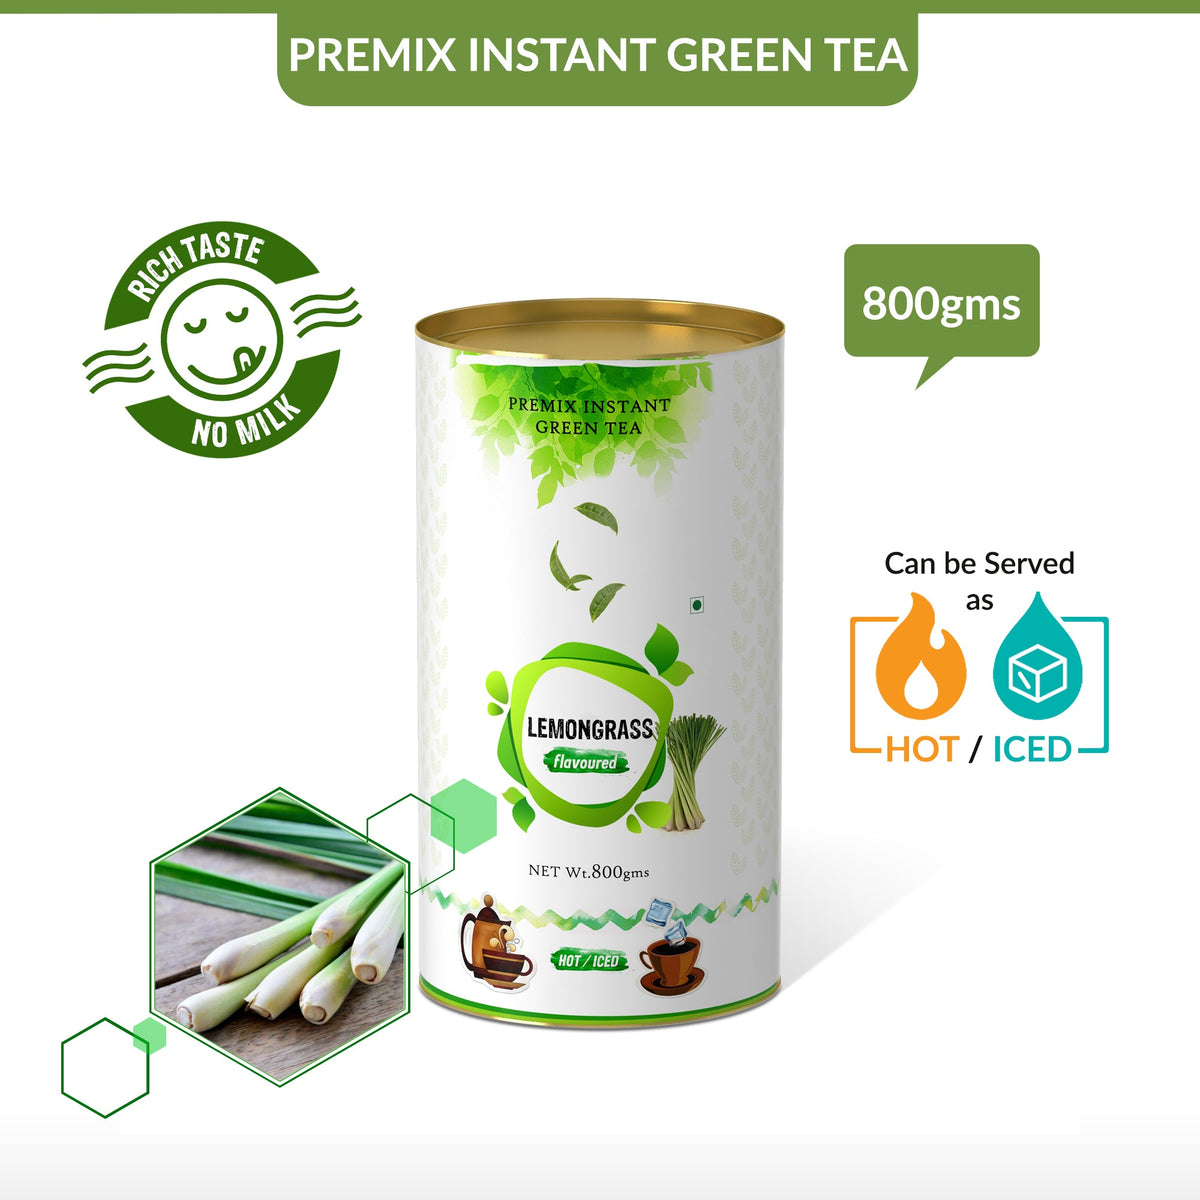 Lemongrass Flavored Instant Green Tea